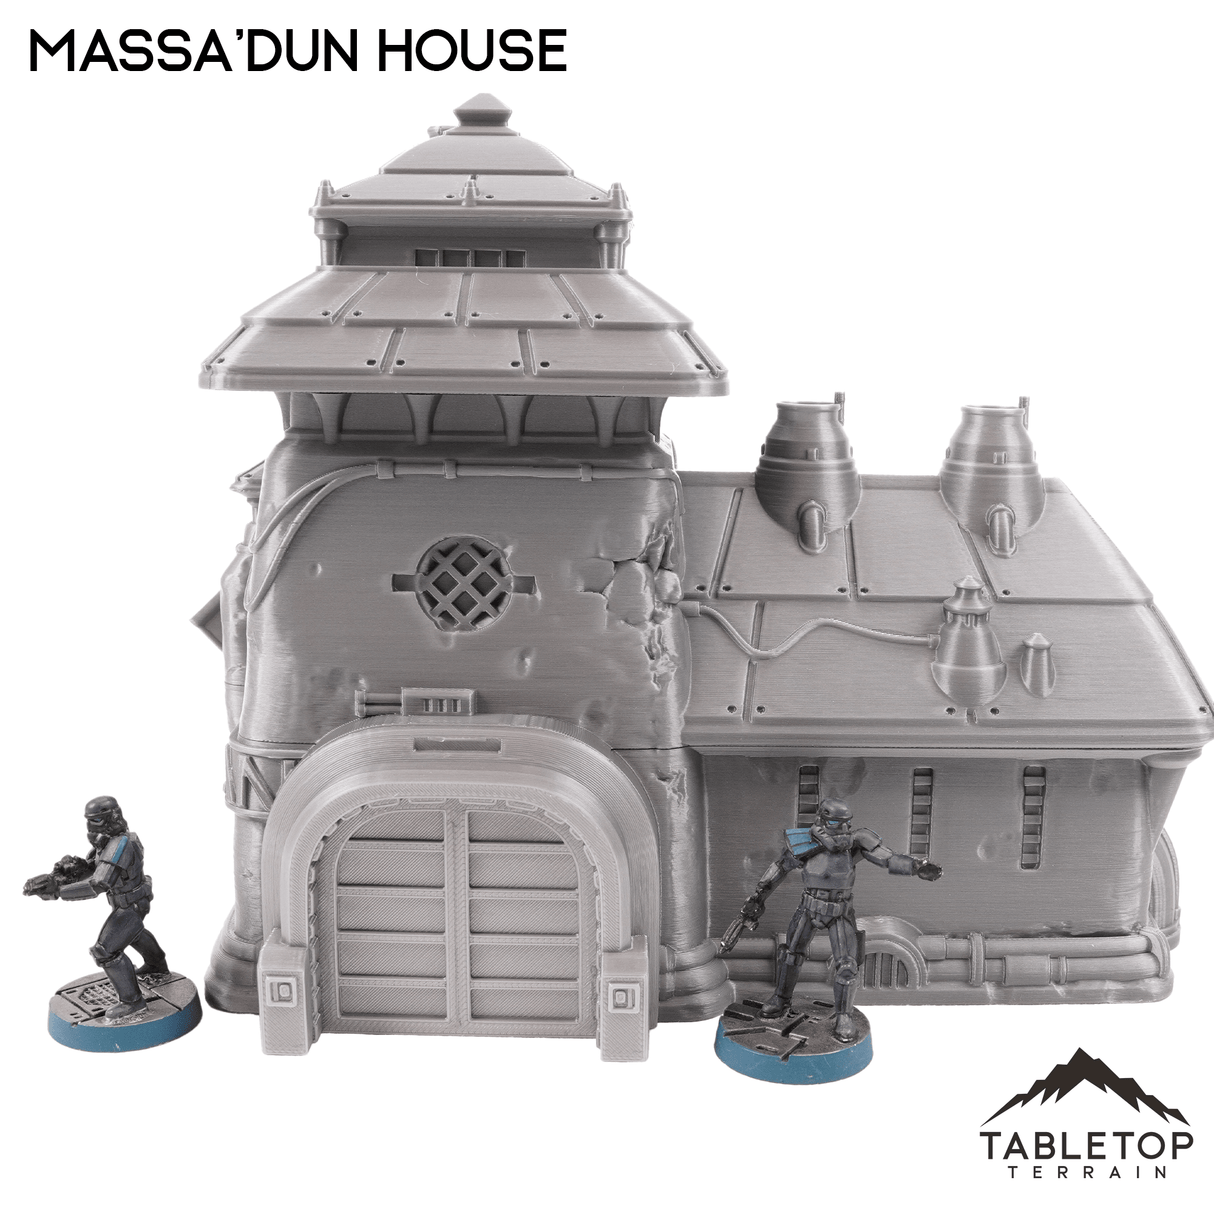 Tabletop Terrain Building Massa'Dun House